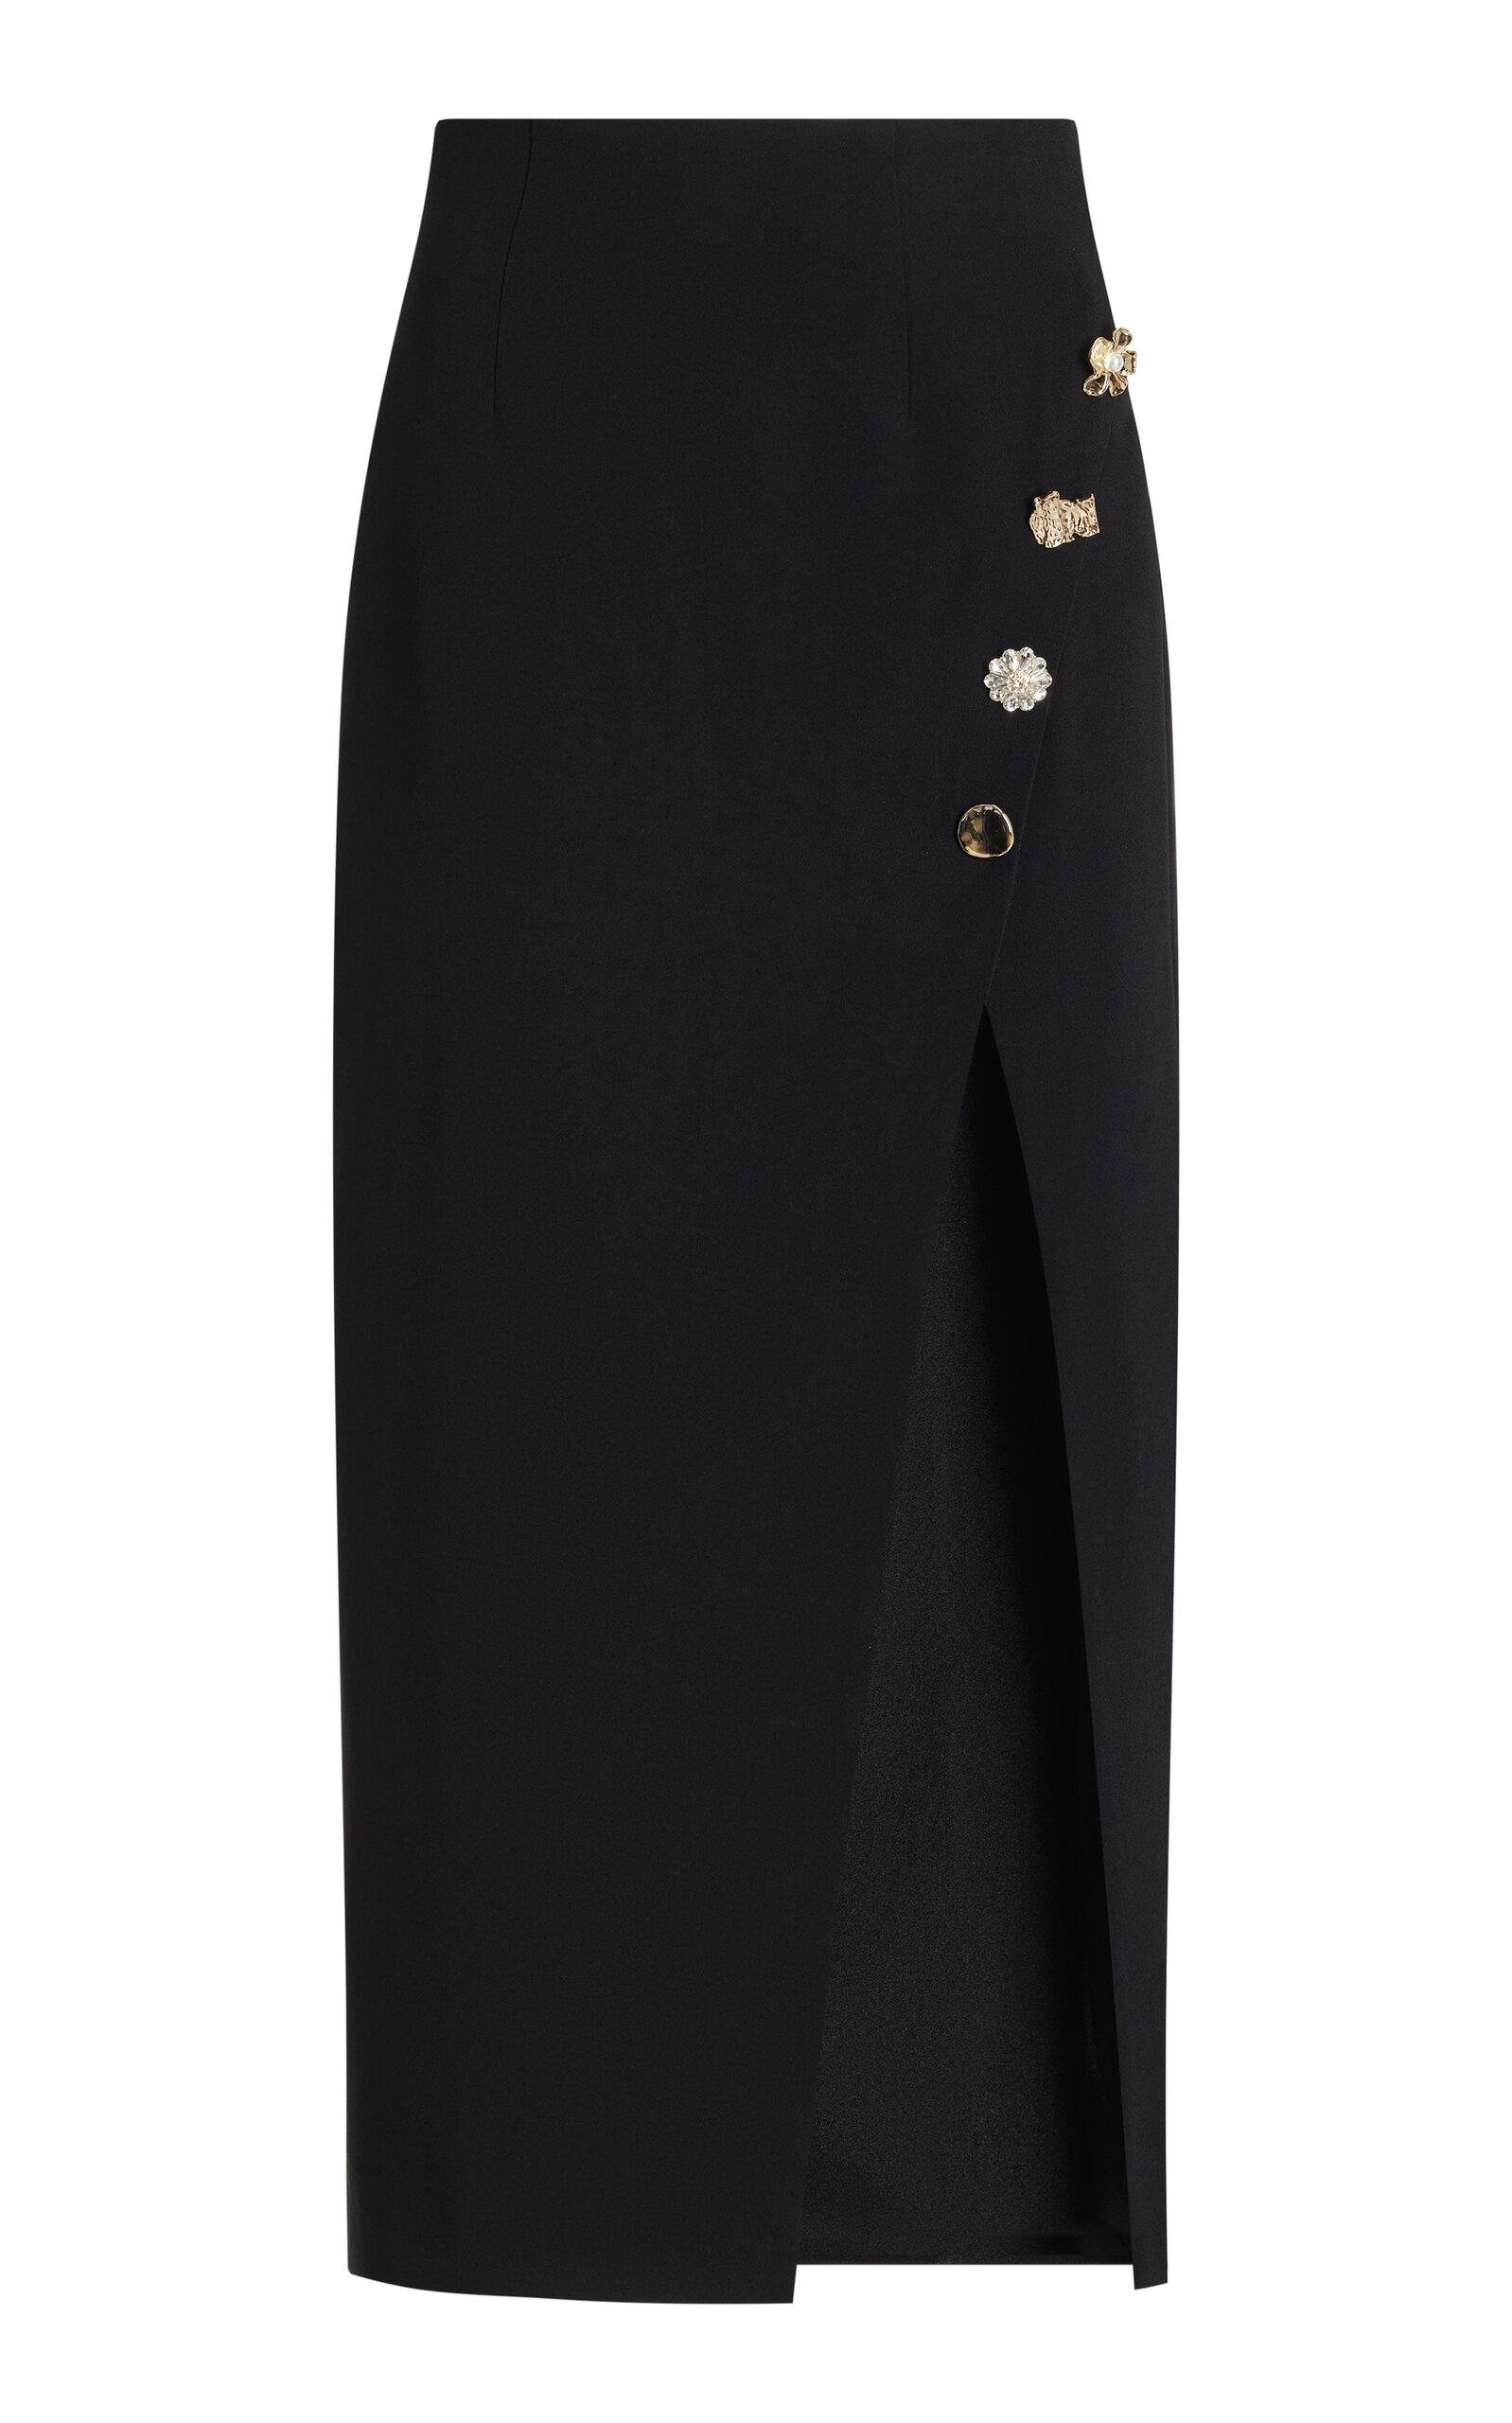 Self Portrait - Embellished Crepe Midi Skirt - Black - US 10 - Moda Operandi by SELF-PORTRAIT